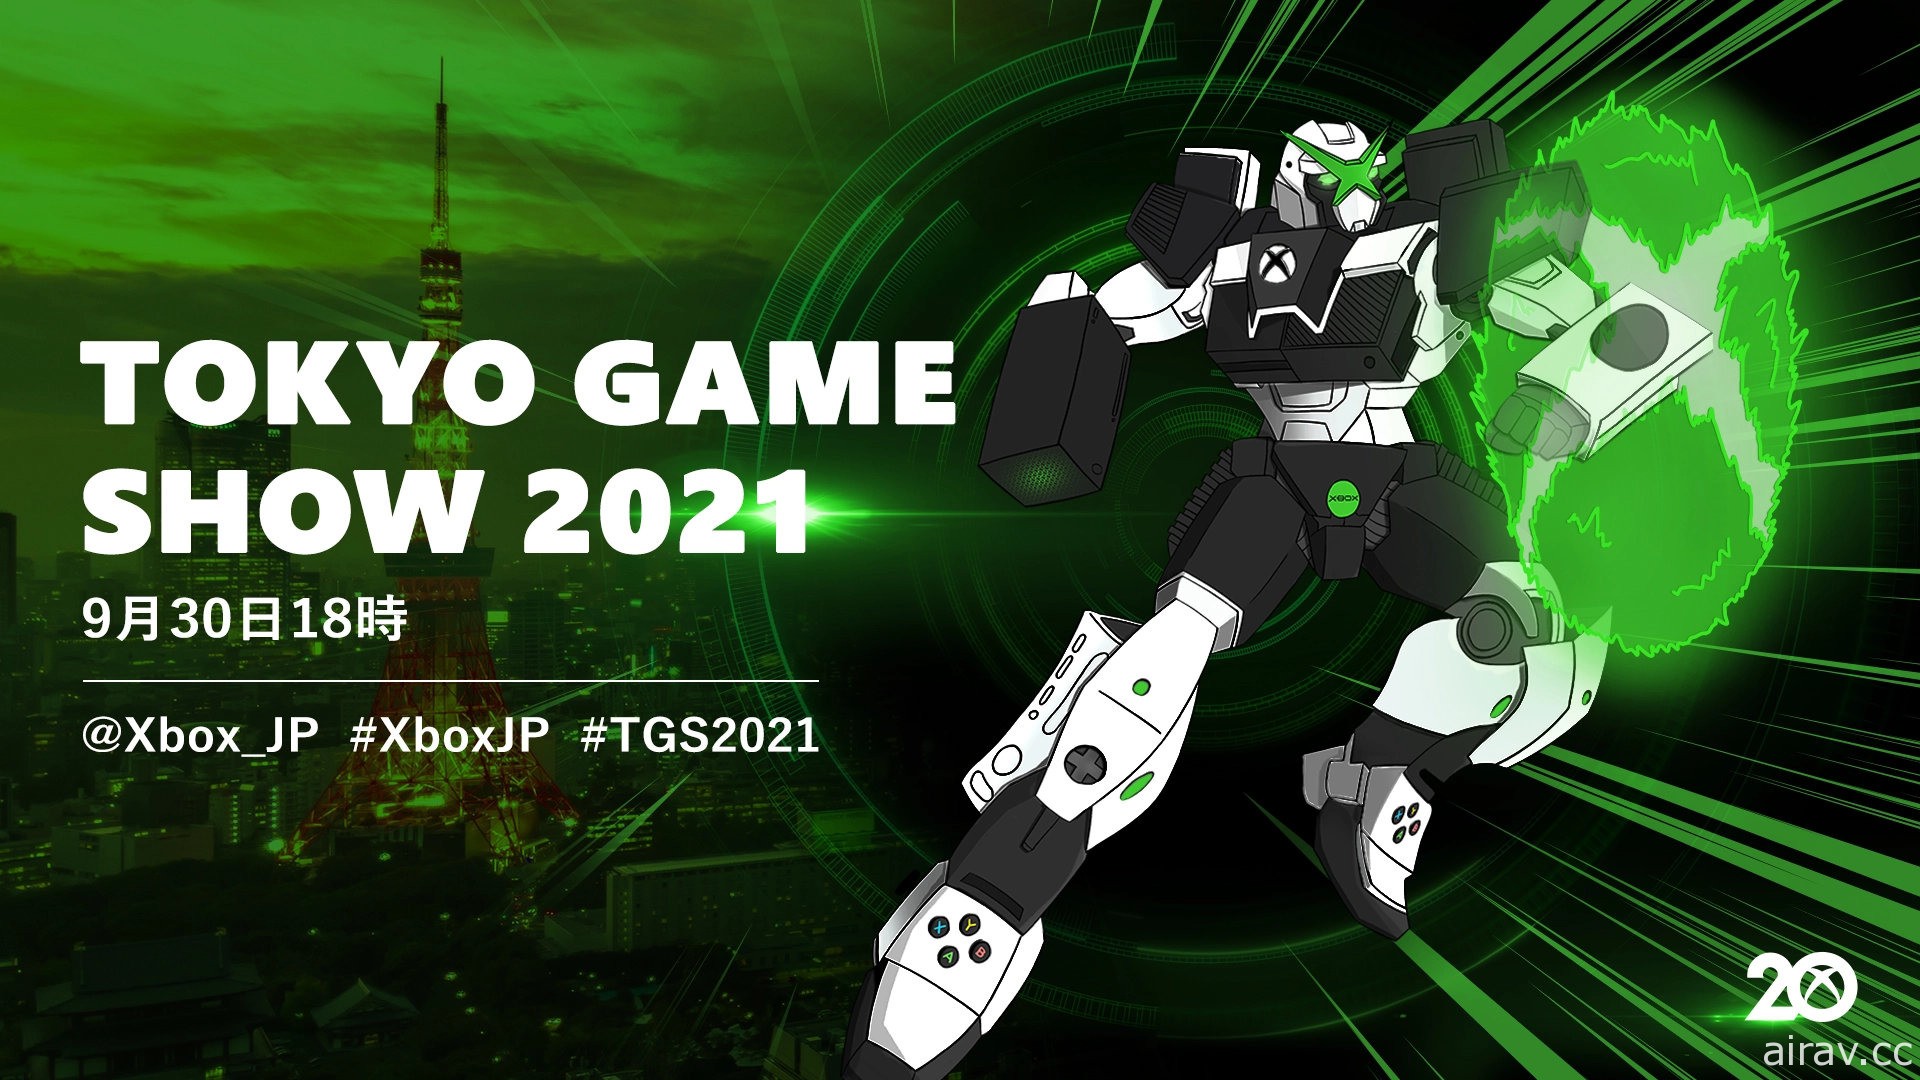 【TGS 21】日本微軟宣布將參加 TGS 展出 預定 9/30 帶來 TGS 特別直播節目